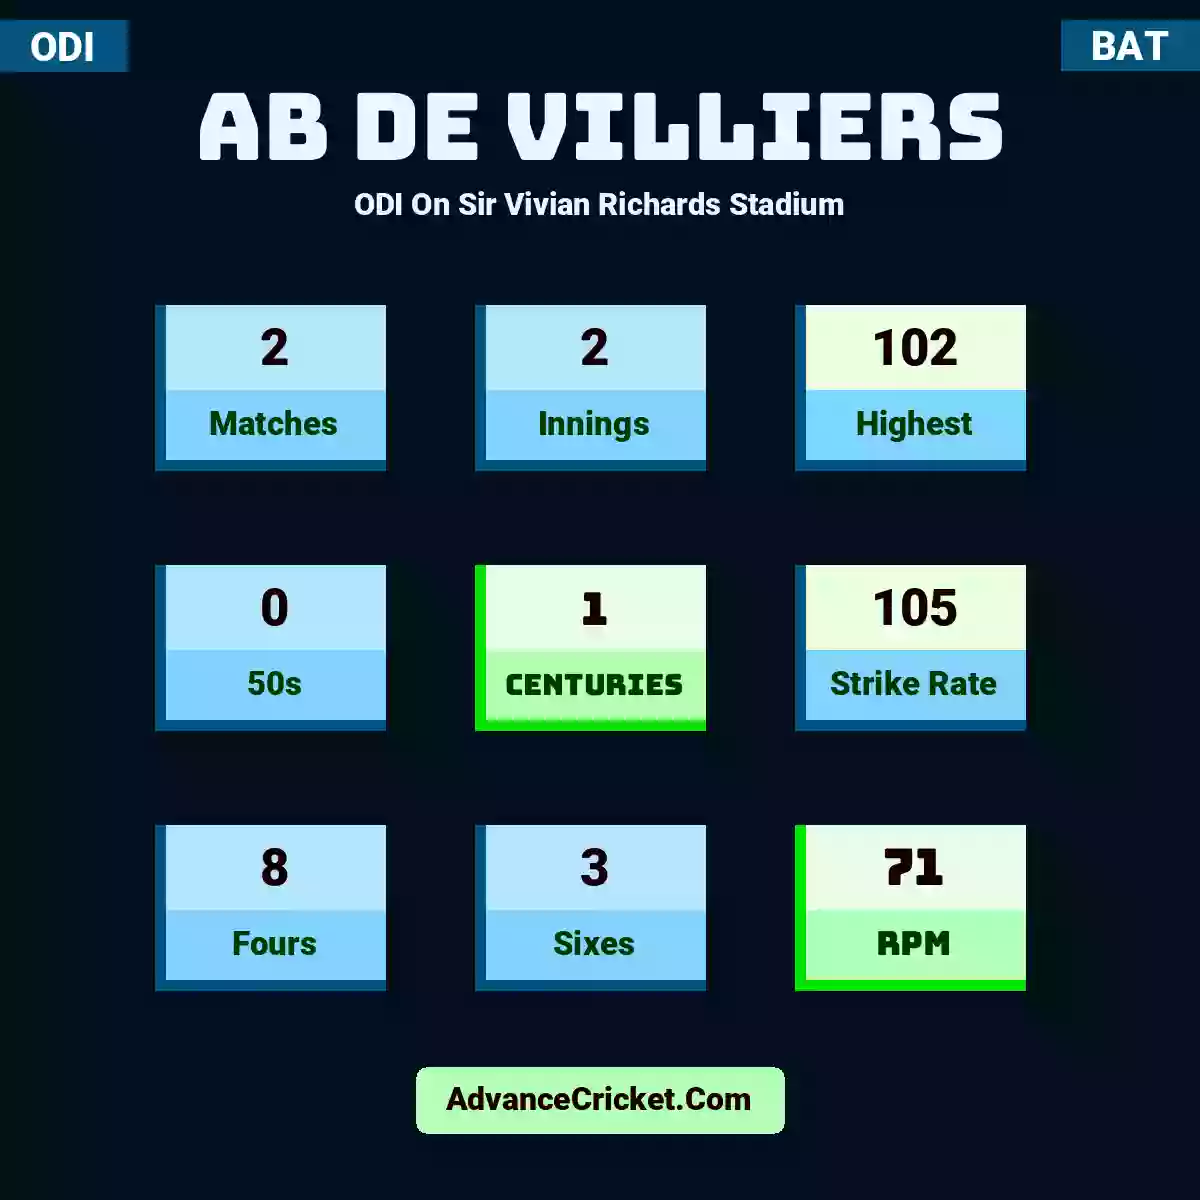 AB de Villiers ODI  On Sir Vivian Richards Stadium, AB de Villiers played 2 matches, scored 102 runs as highest, 0 half-centuries, and 1 centuries, with a strike rate of 105. A.Villiers hit 8 fours and 3 sixes, with an RPM of 71.